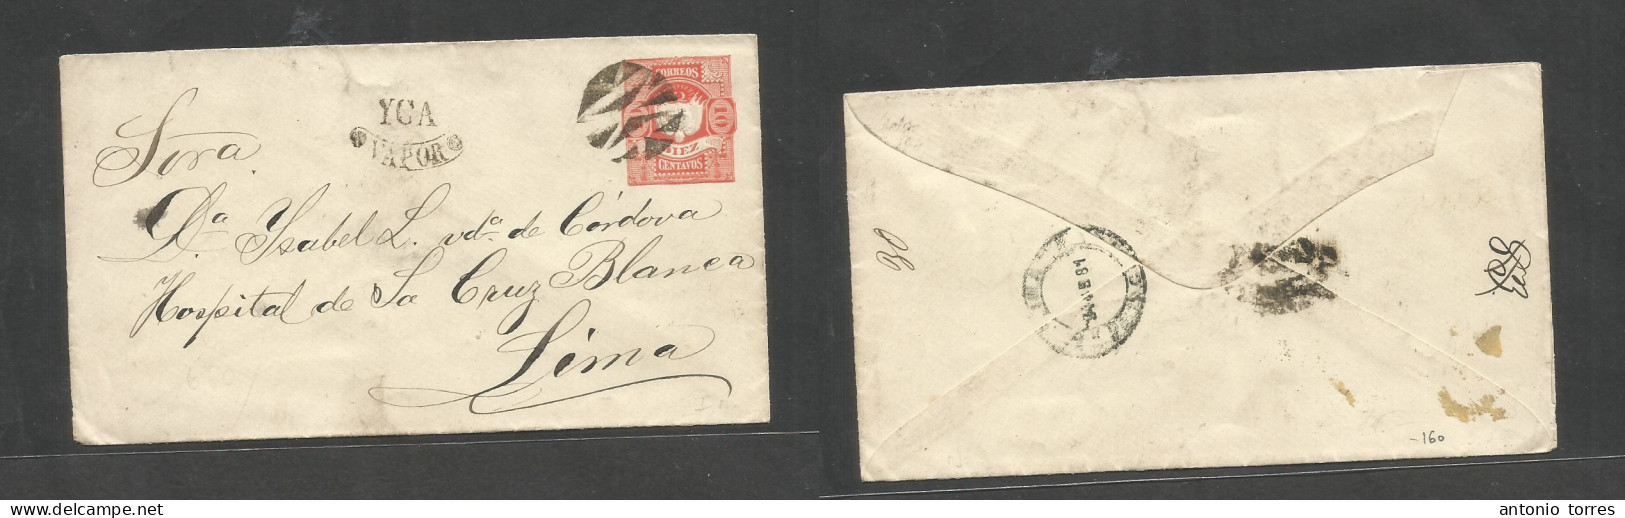 Peru. 1881 Yca - Lima (24 March) 10c Vermilion Embossed Stationary Envelope, Depart Cork Cancel + "VIA VAPOR" Illustrate - Perù